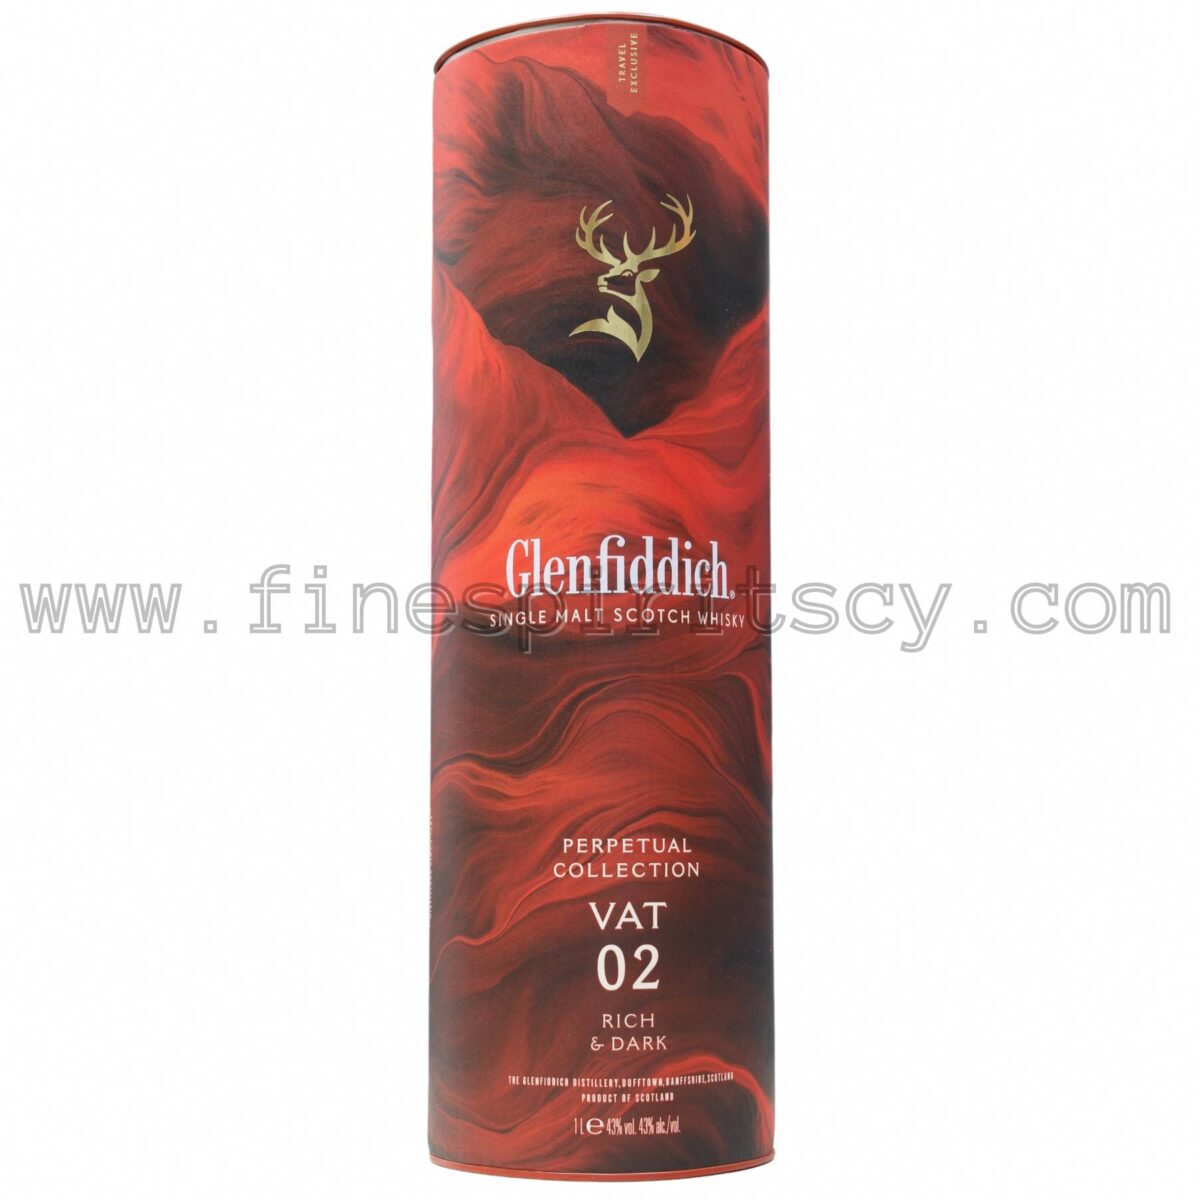 Glenfiddich Perpetual Collection VAT 02 Rich & Dark Cyprus Price FSCY